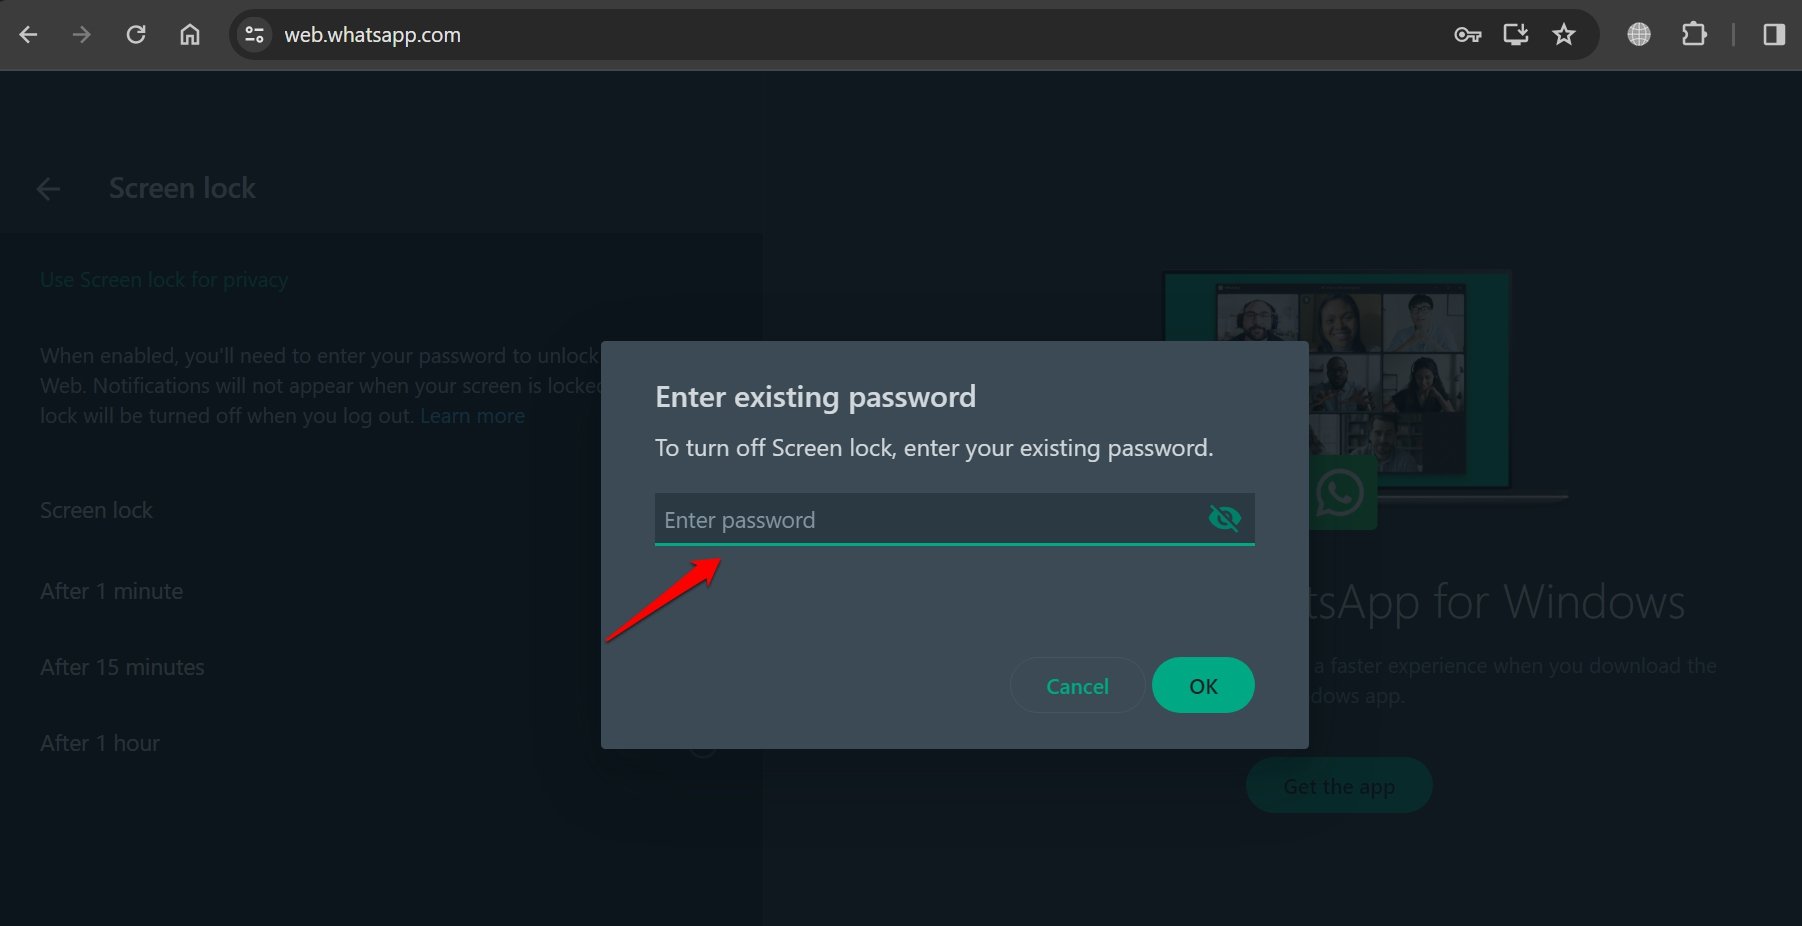 enter existing password to remove WhatsApp web screen lock